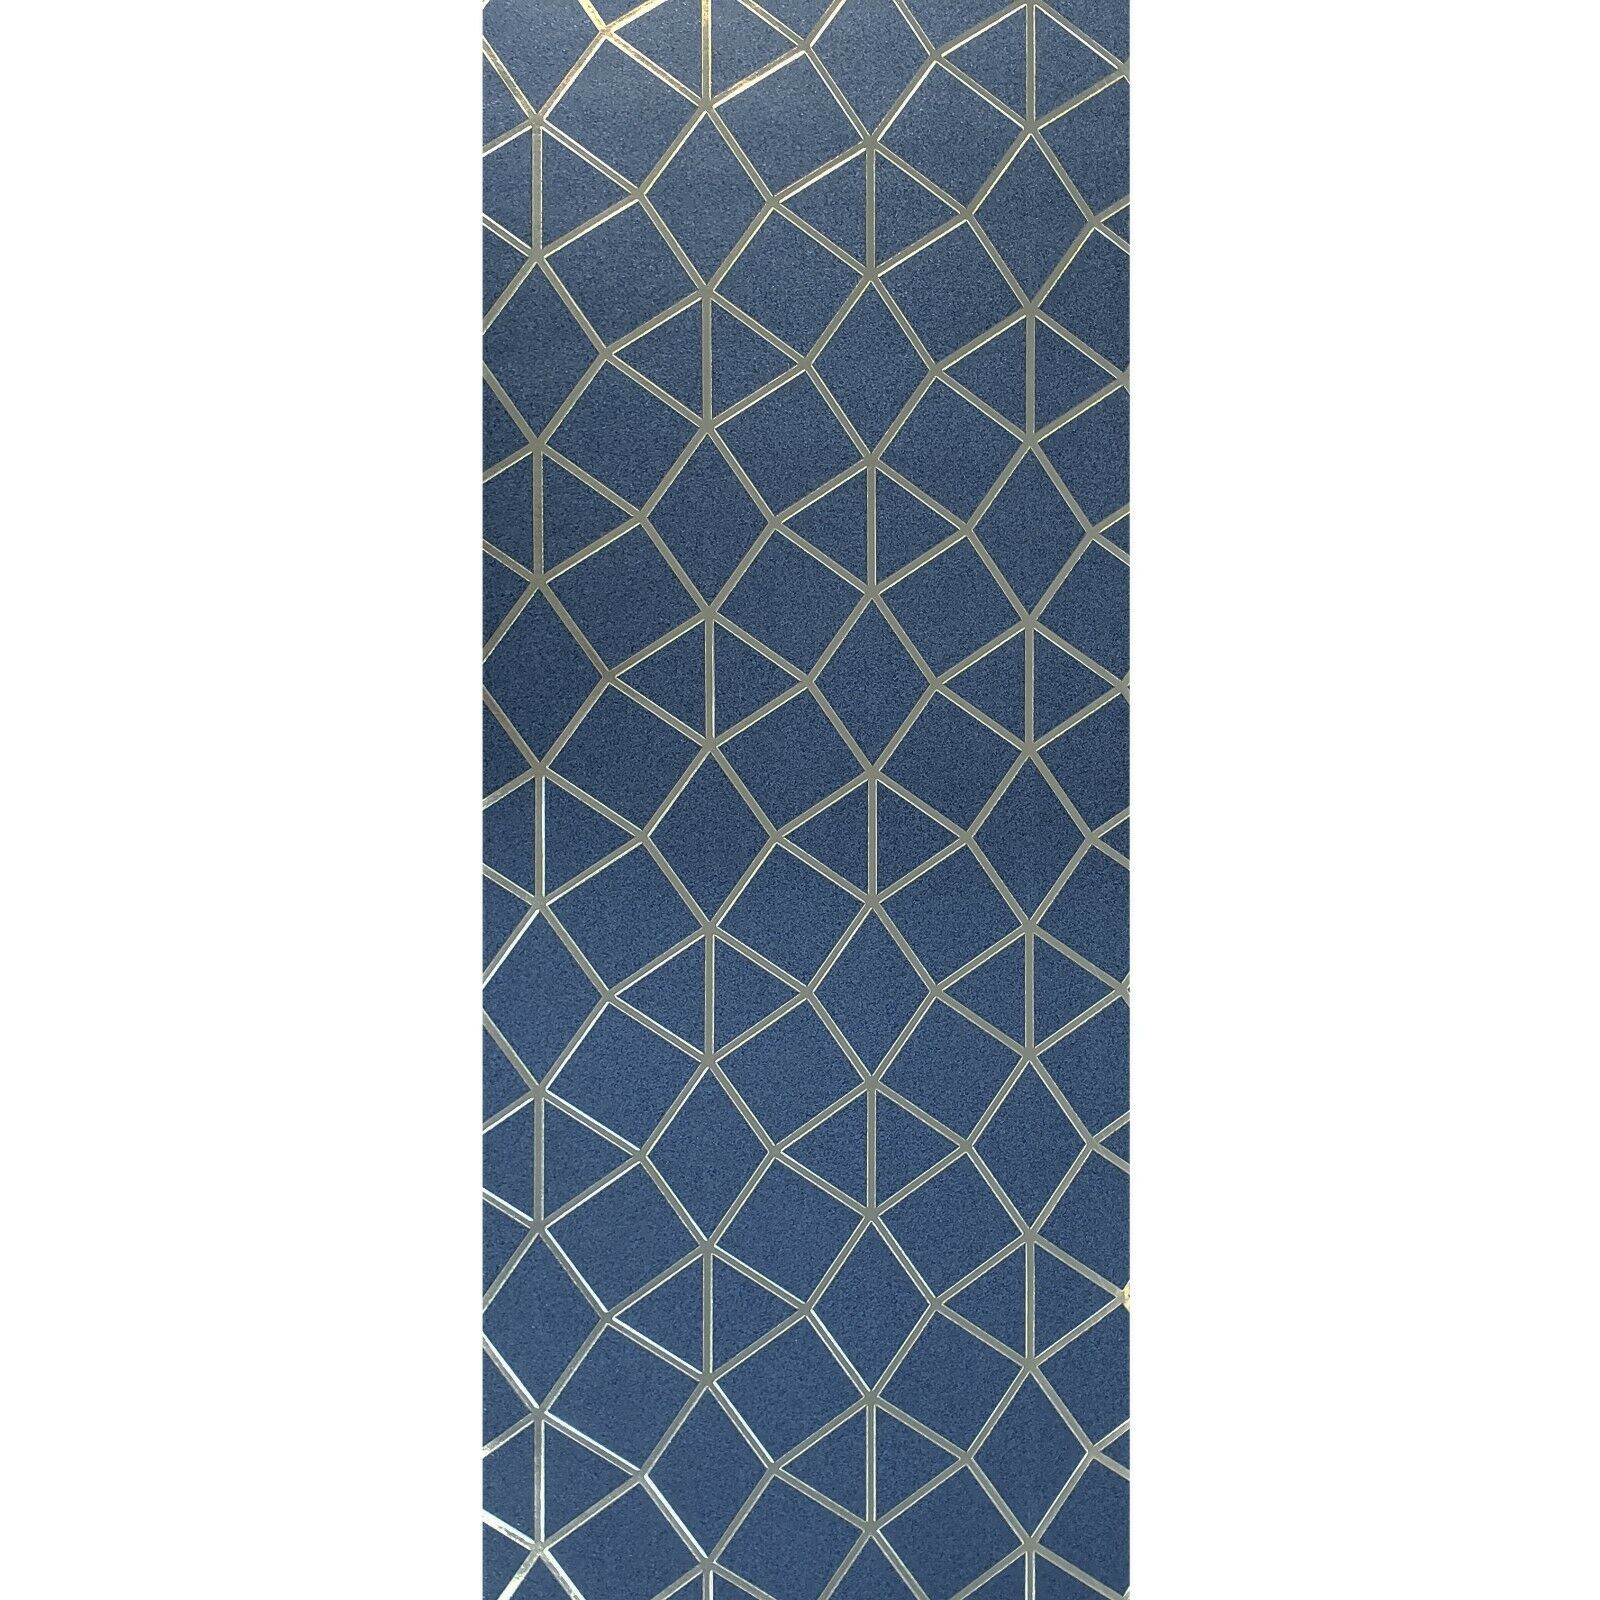 WM36133301 Grayish blue gold Geometric faux wood Wallpaper